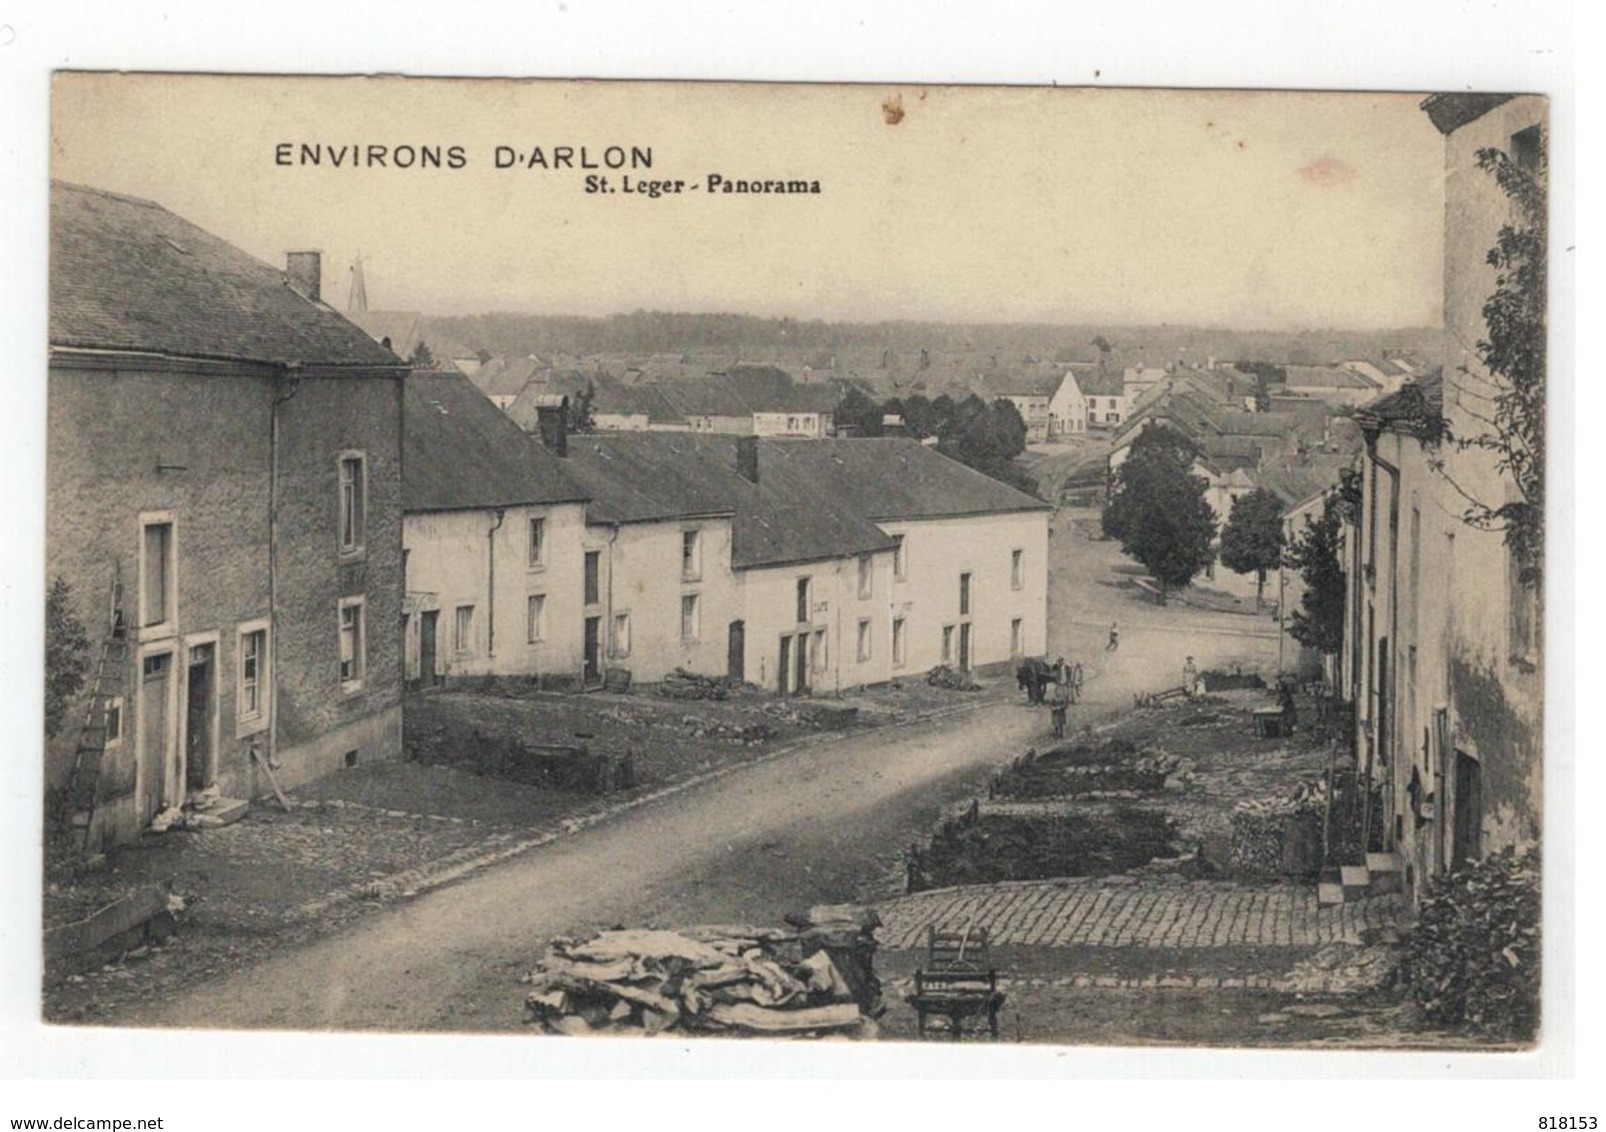 St. Leger - Panorama   ENVIRONS D'ARLON  1914 - Saint-Léger